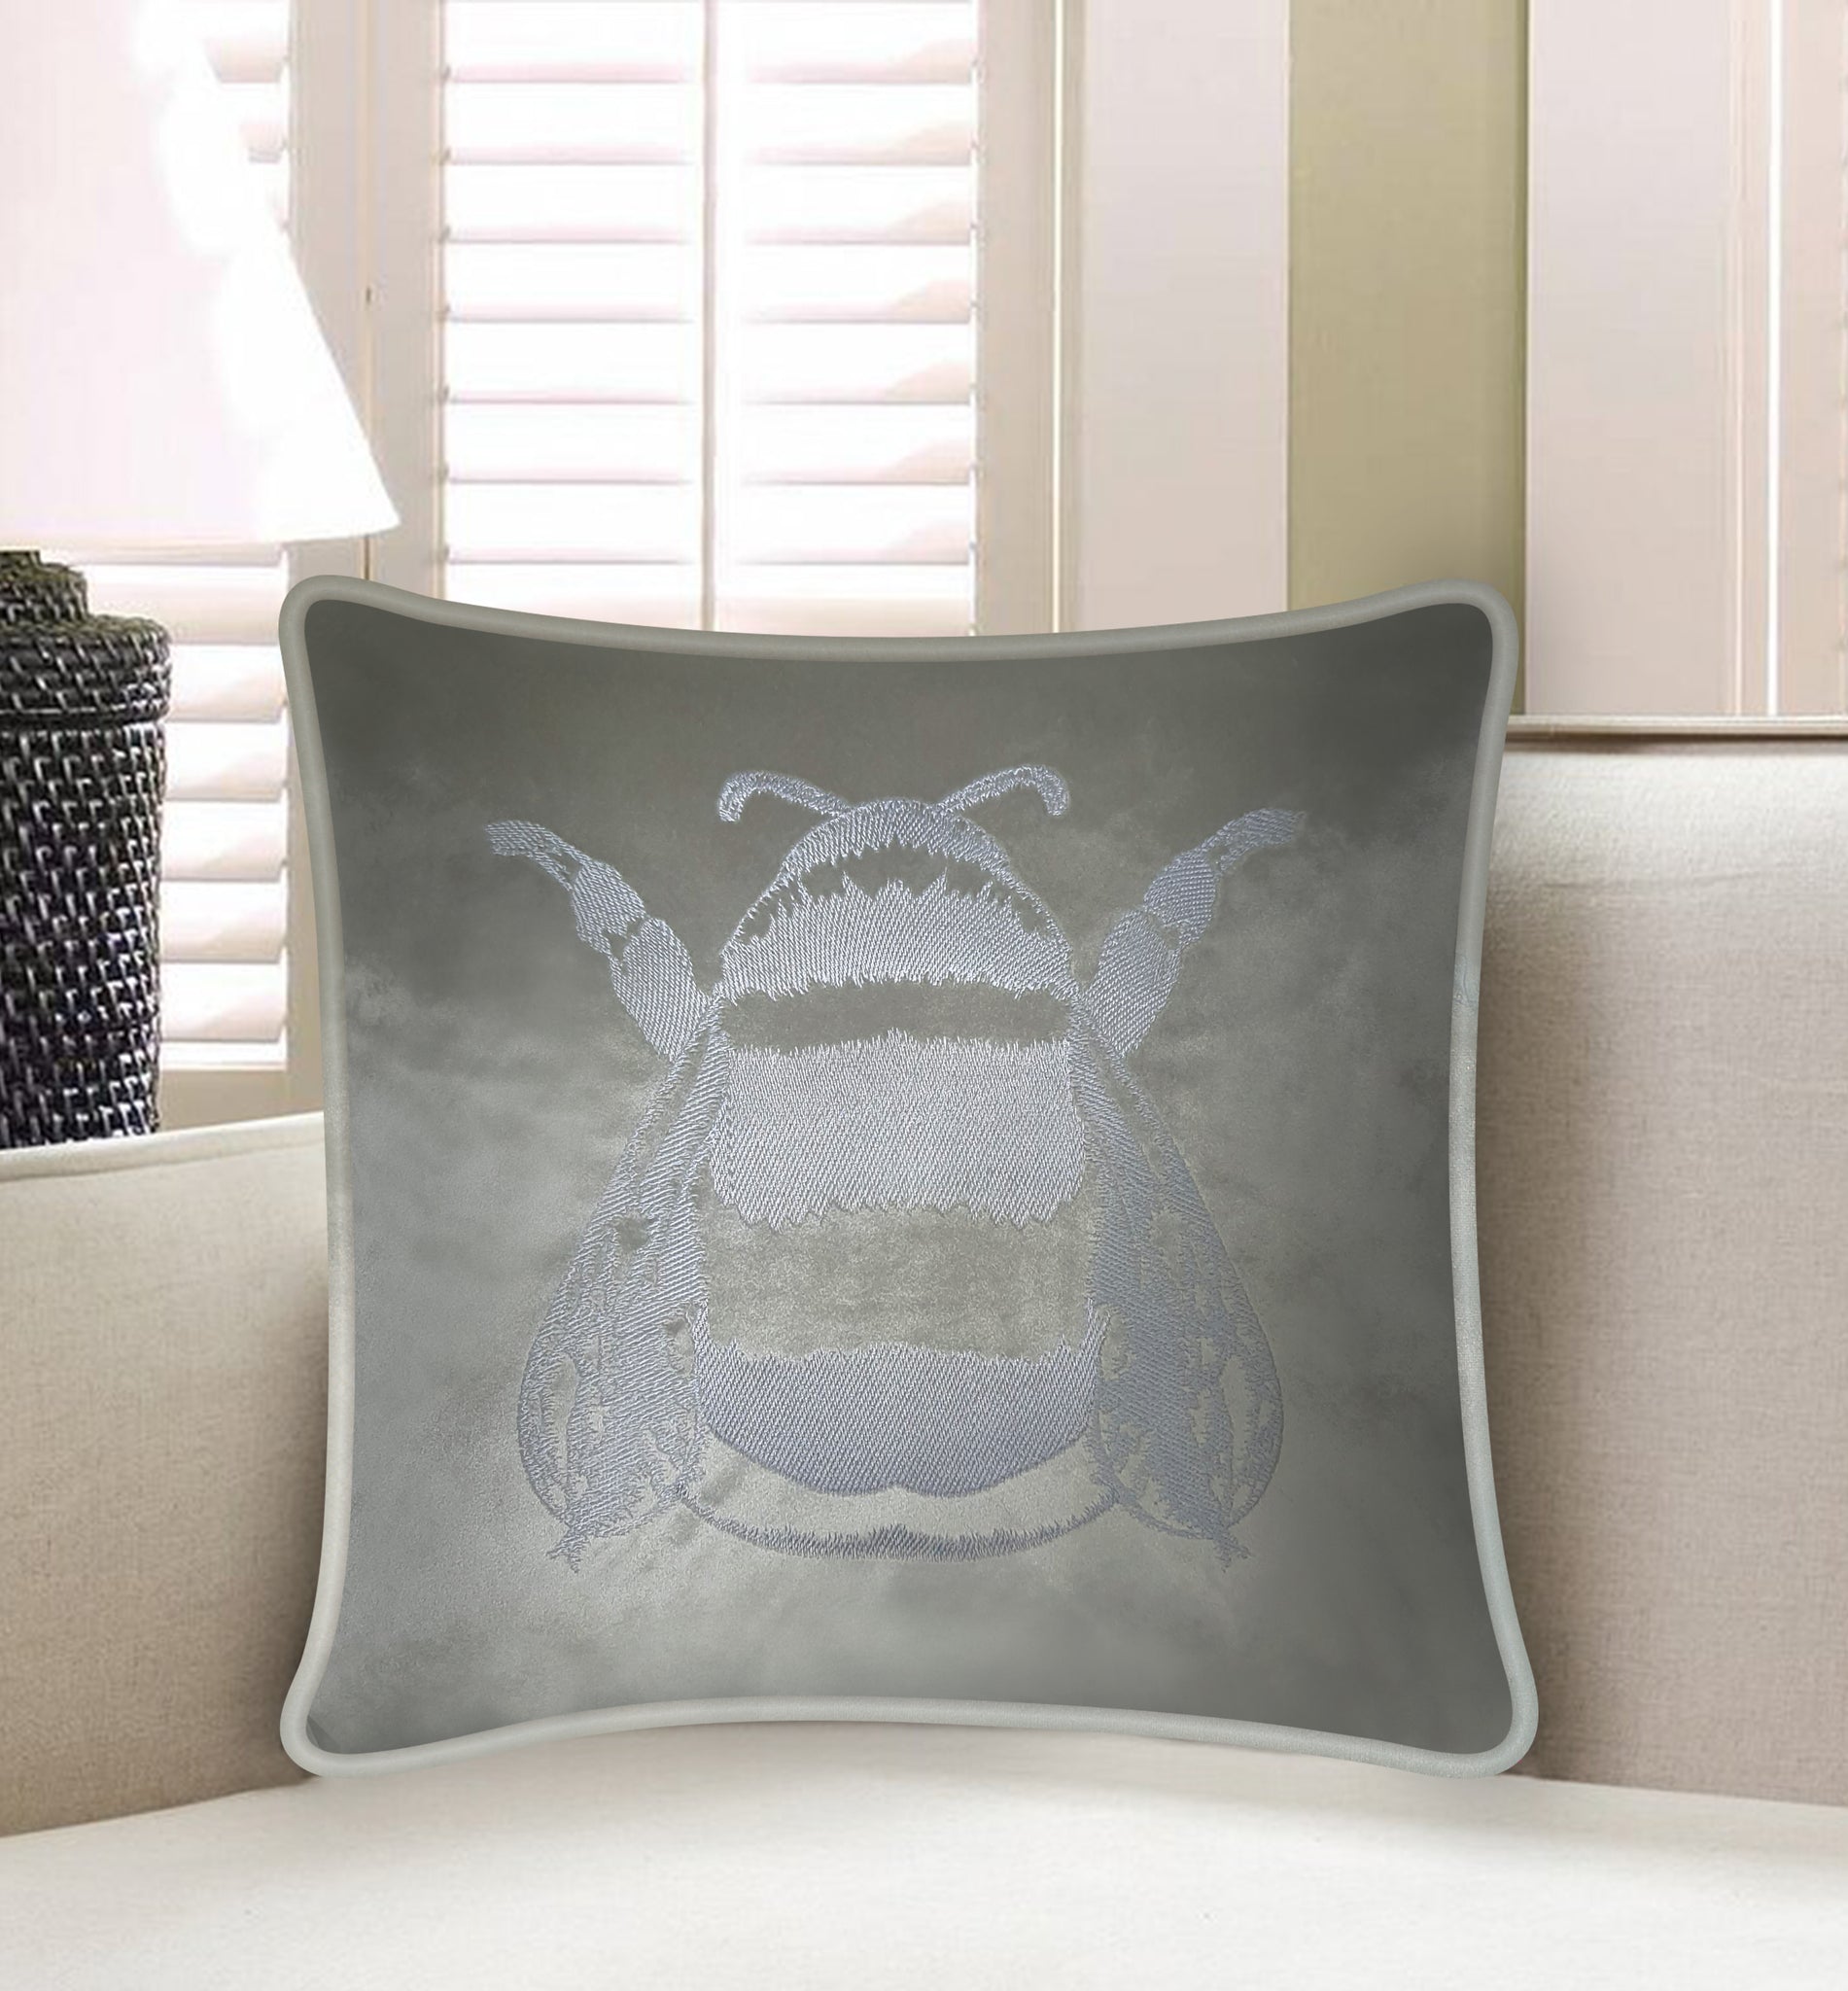  Velvet Cushion Cover Modern Fat Bee Embroidery Decorative Pillowcase Home Decor Throw Pillow for Sofa Chair Living Room 45x45 cm 